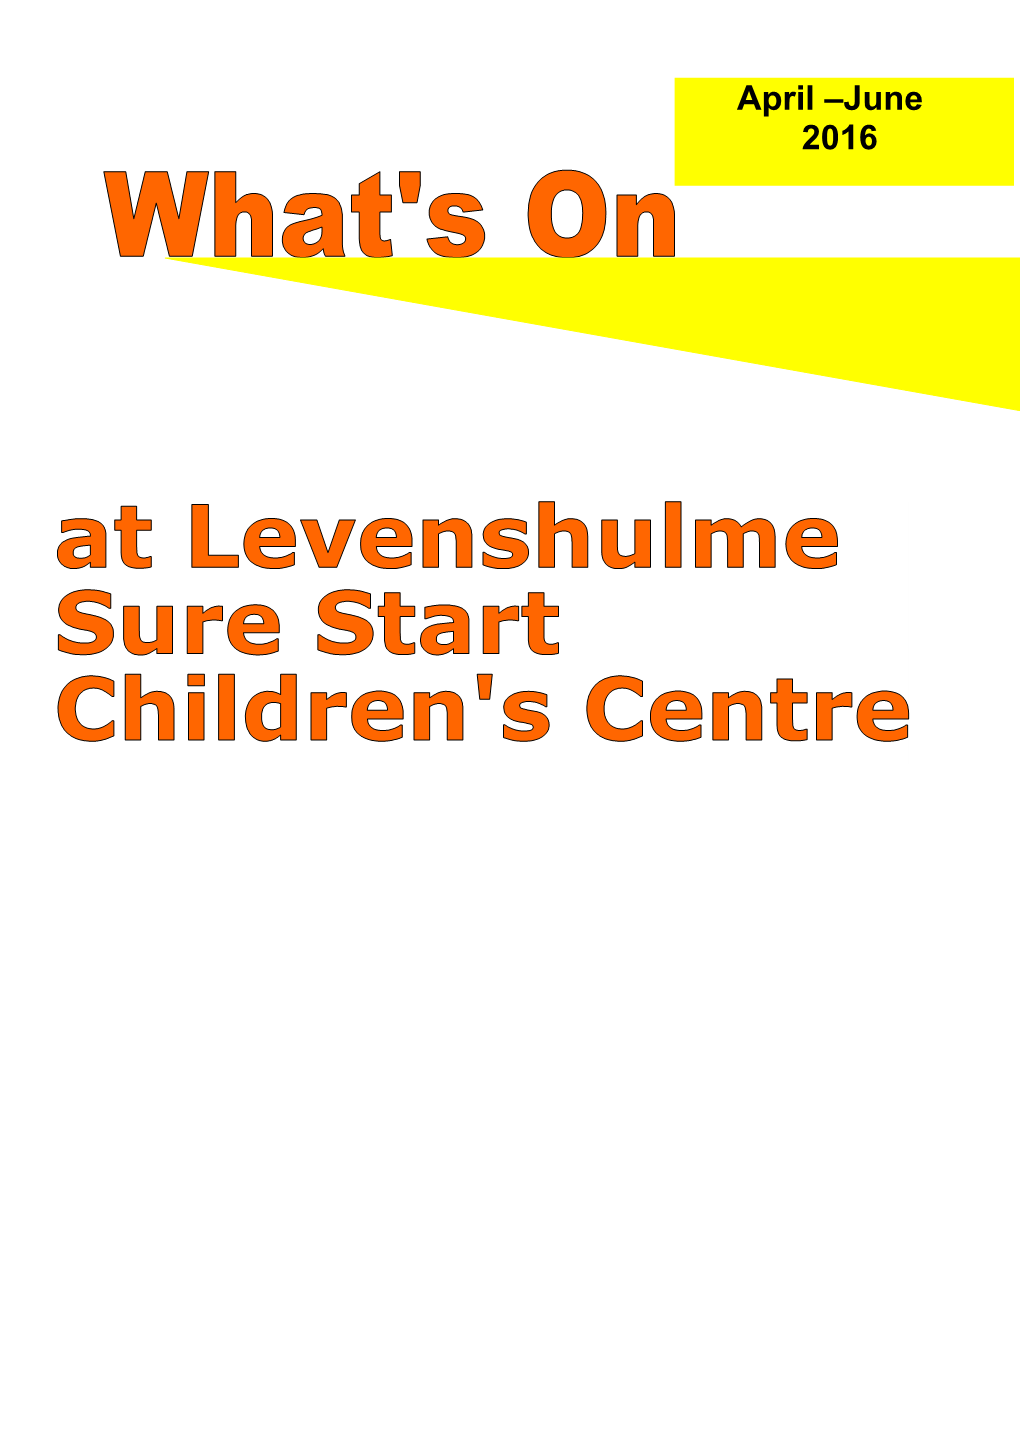 What S on at Levenshulme Sure Start Children S Centre